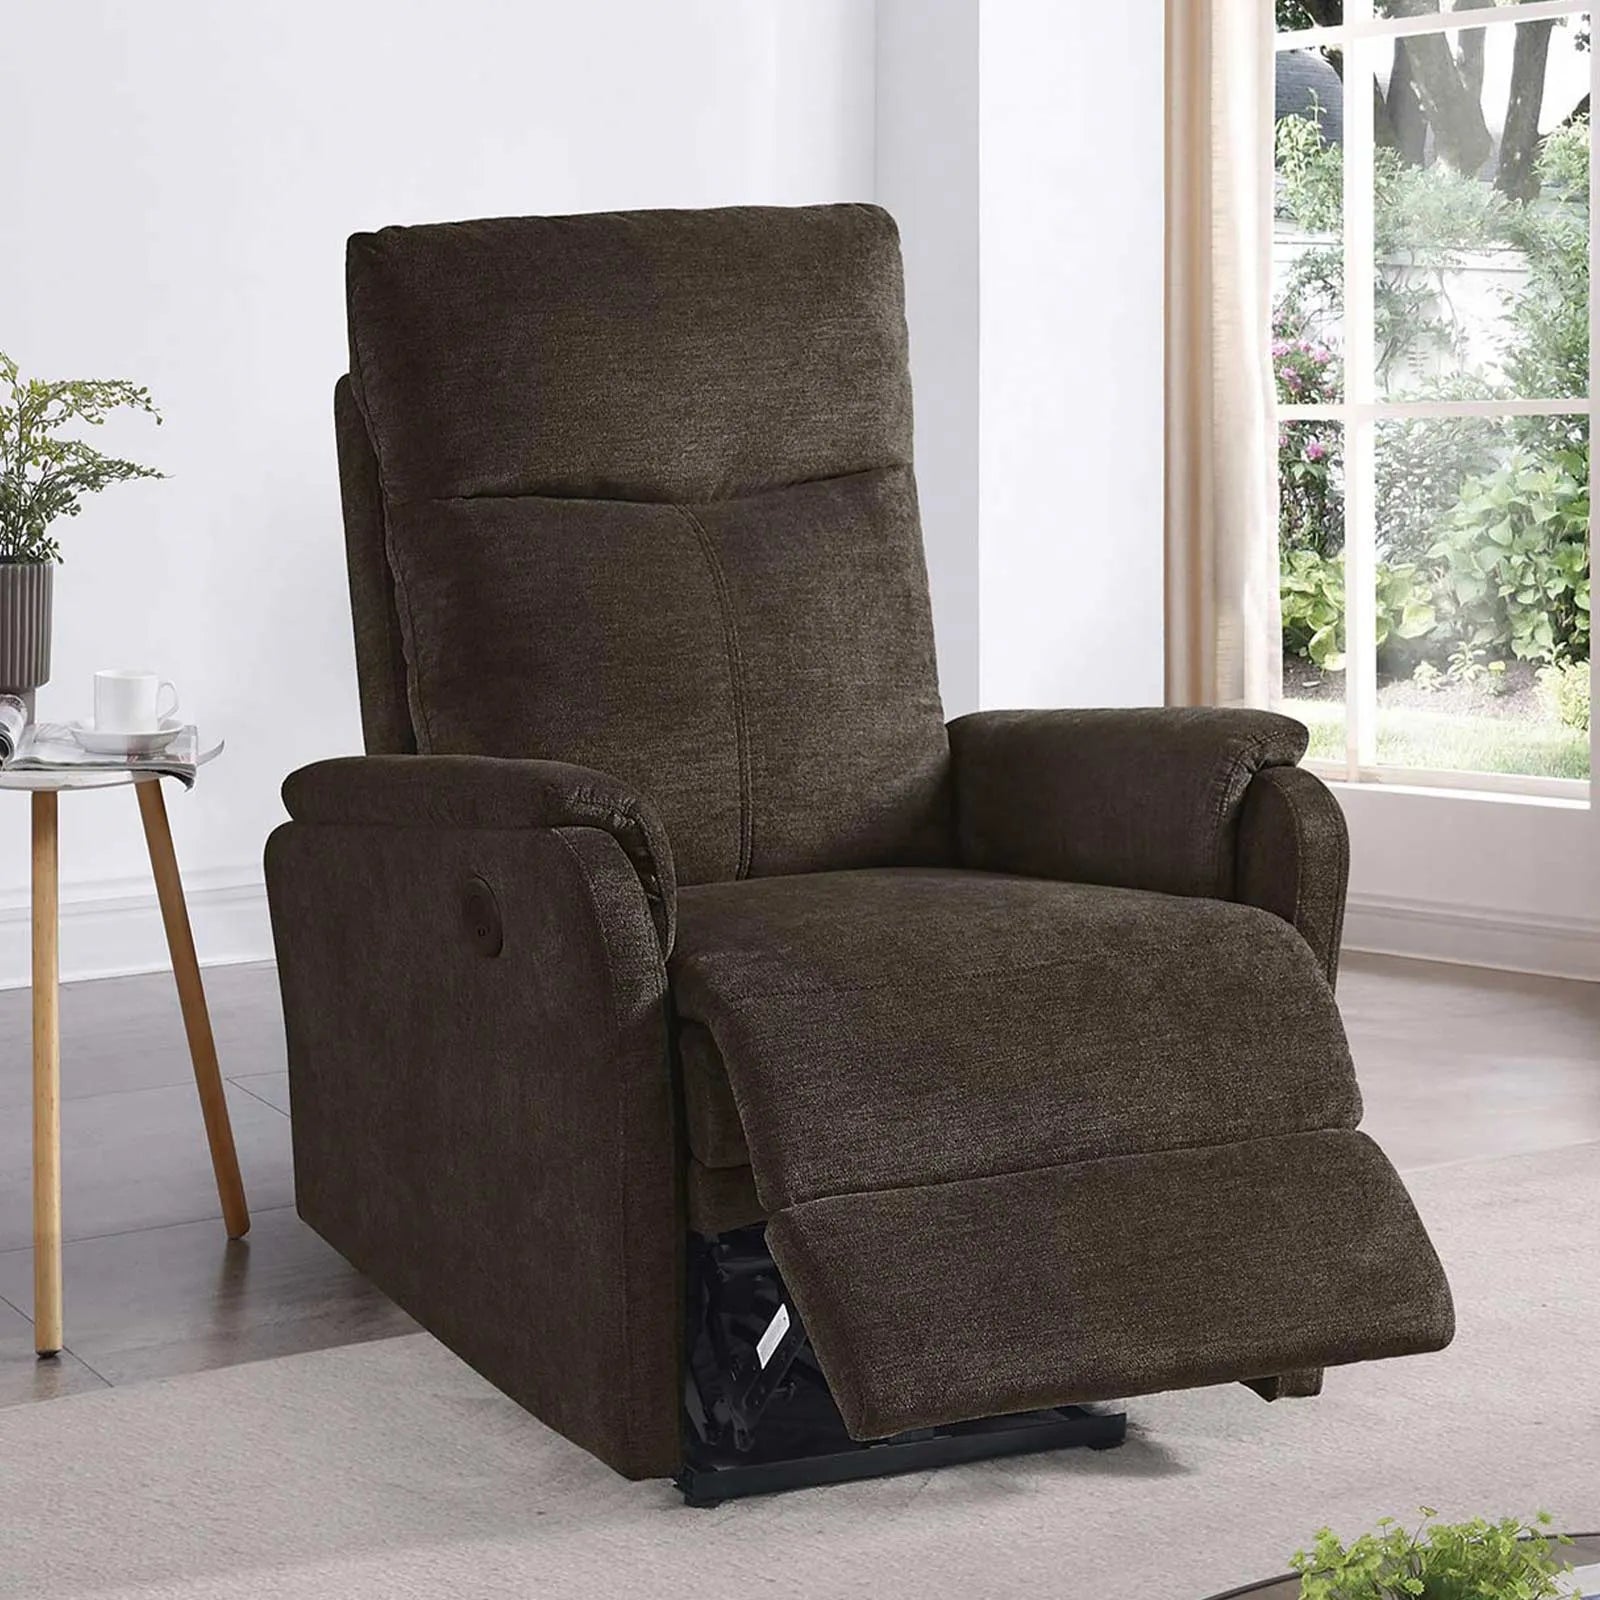 brown power recliner chair